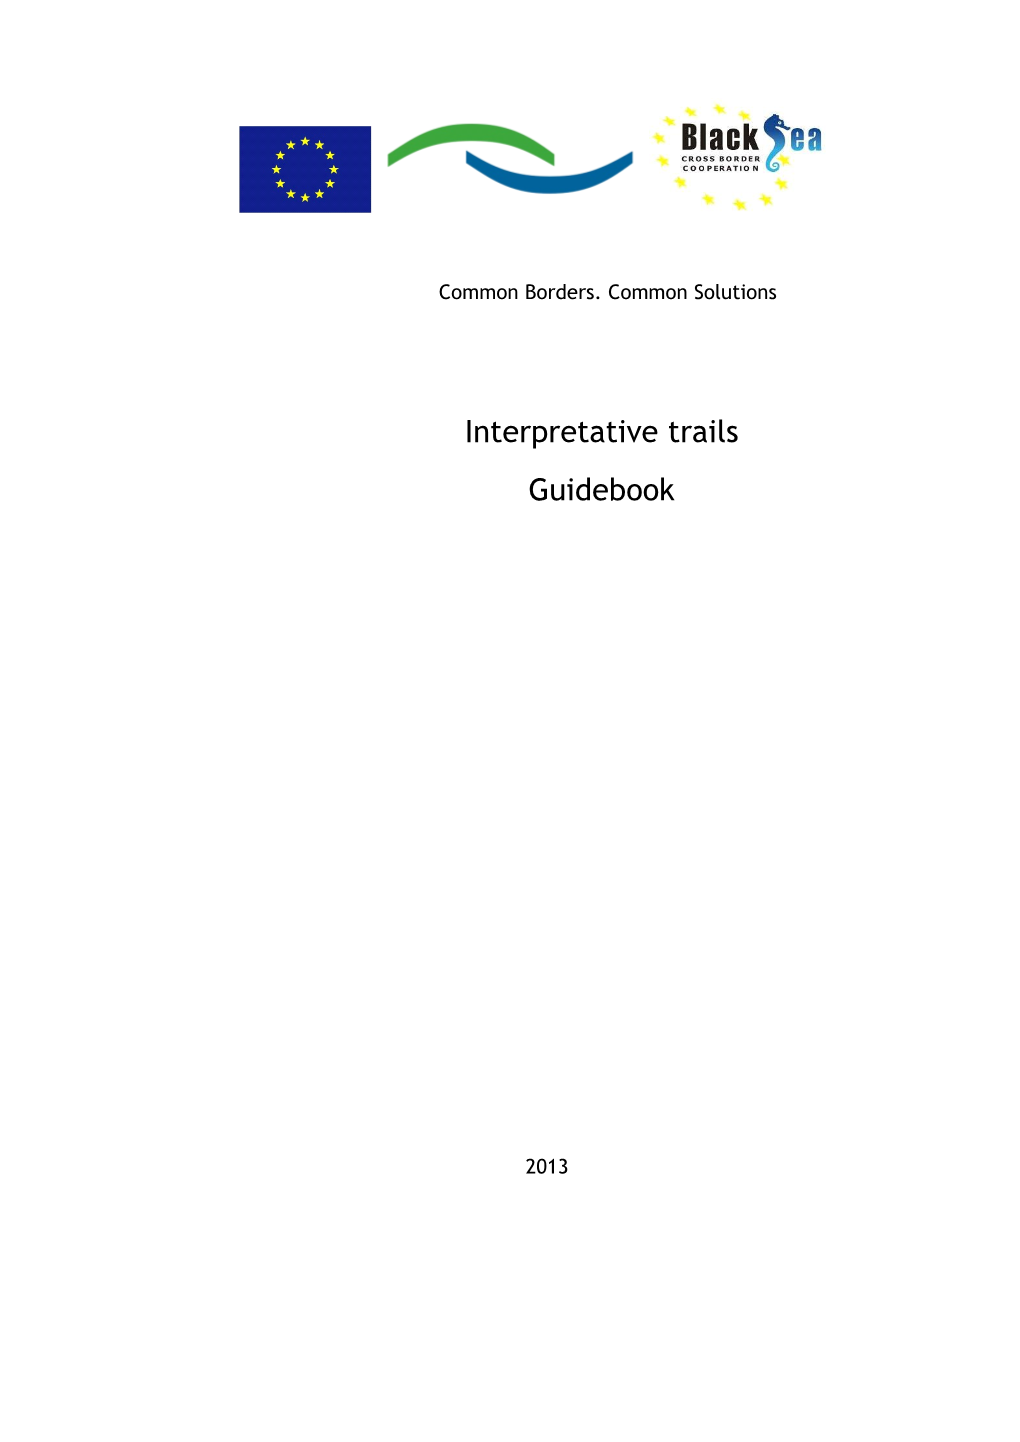 Interpretative Trails Guidebook